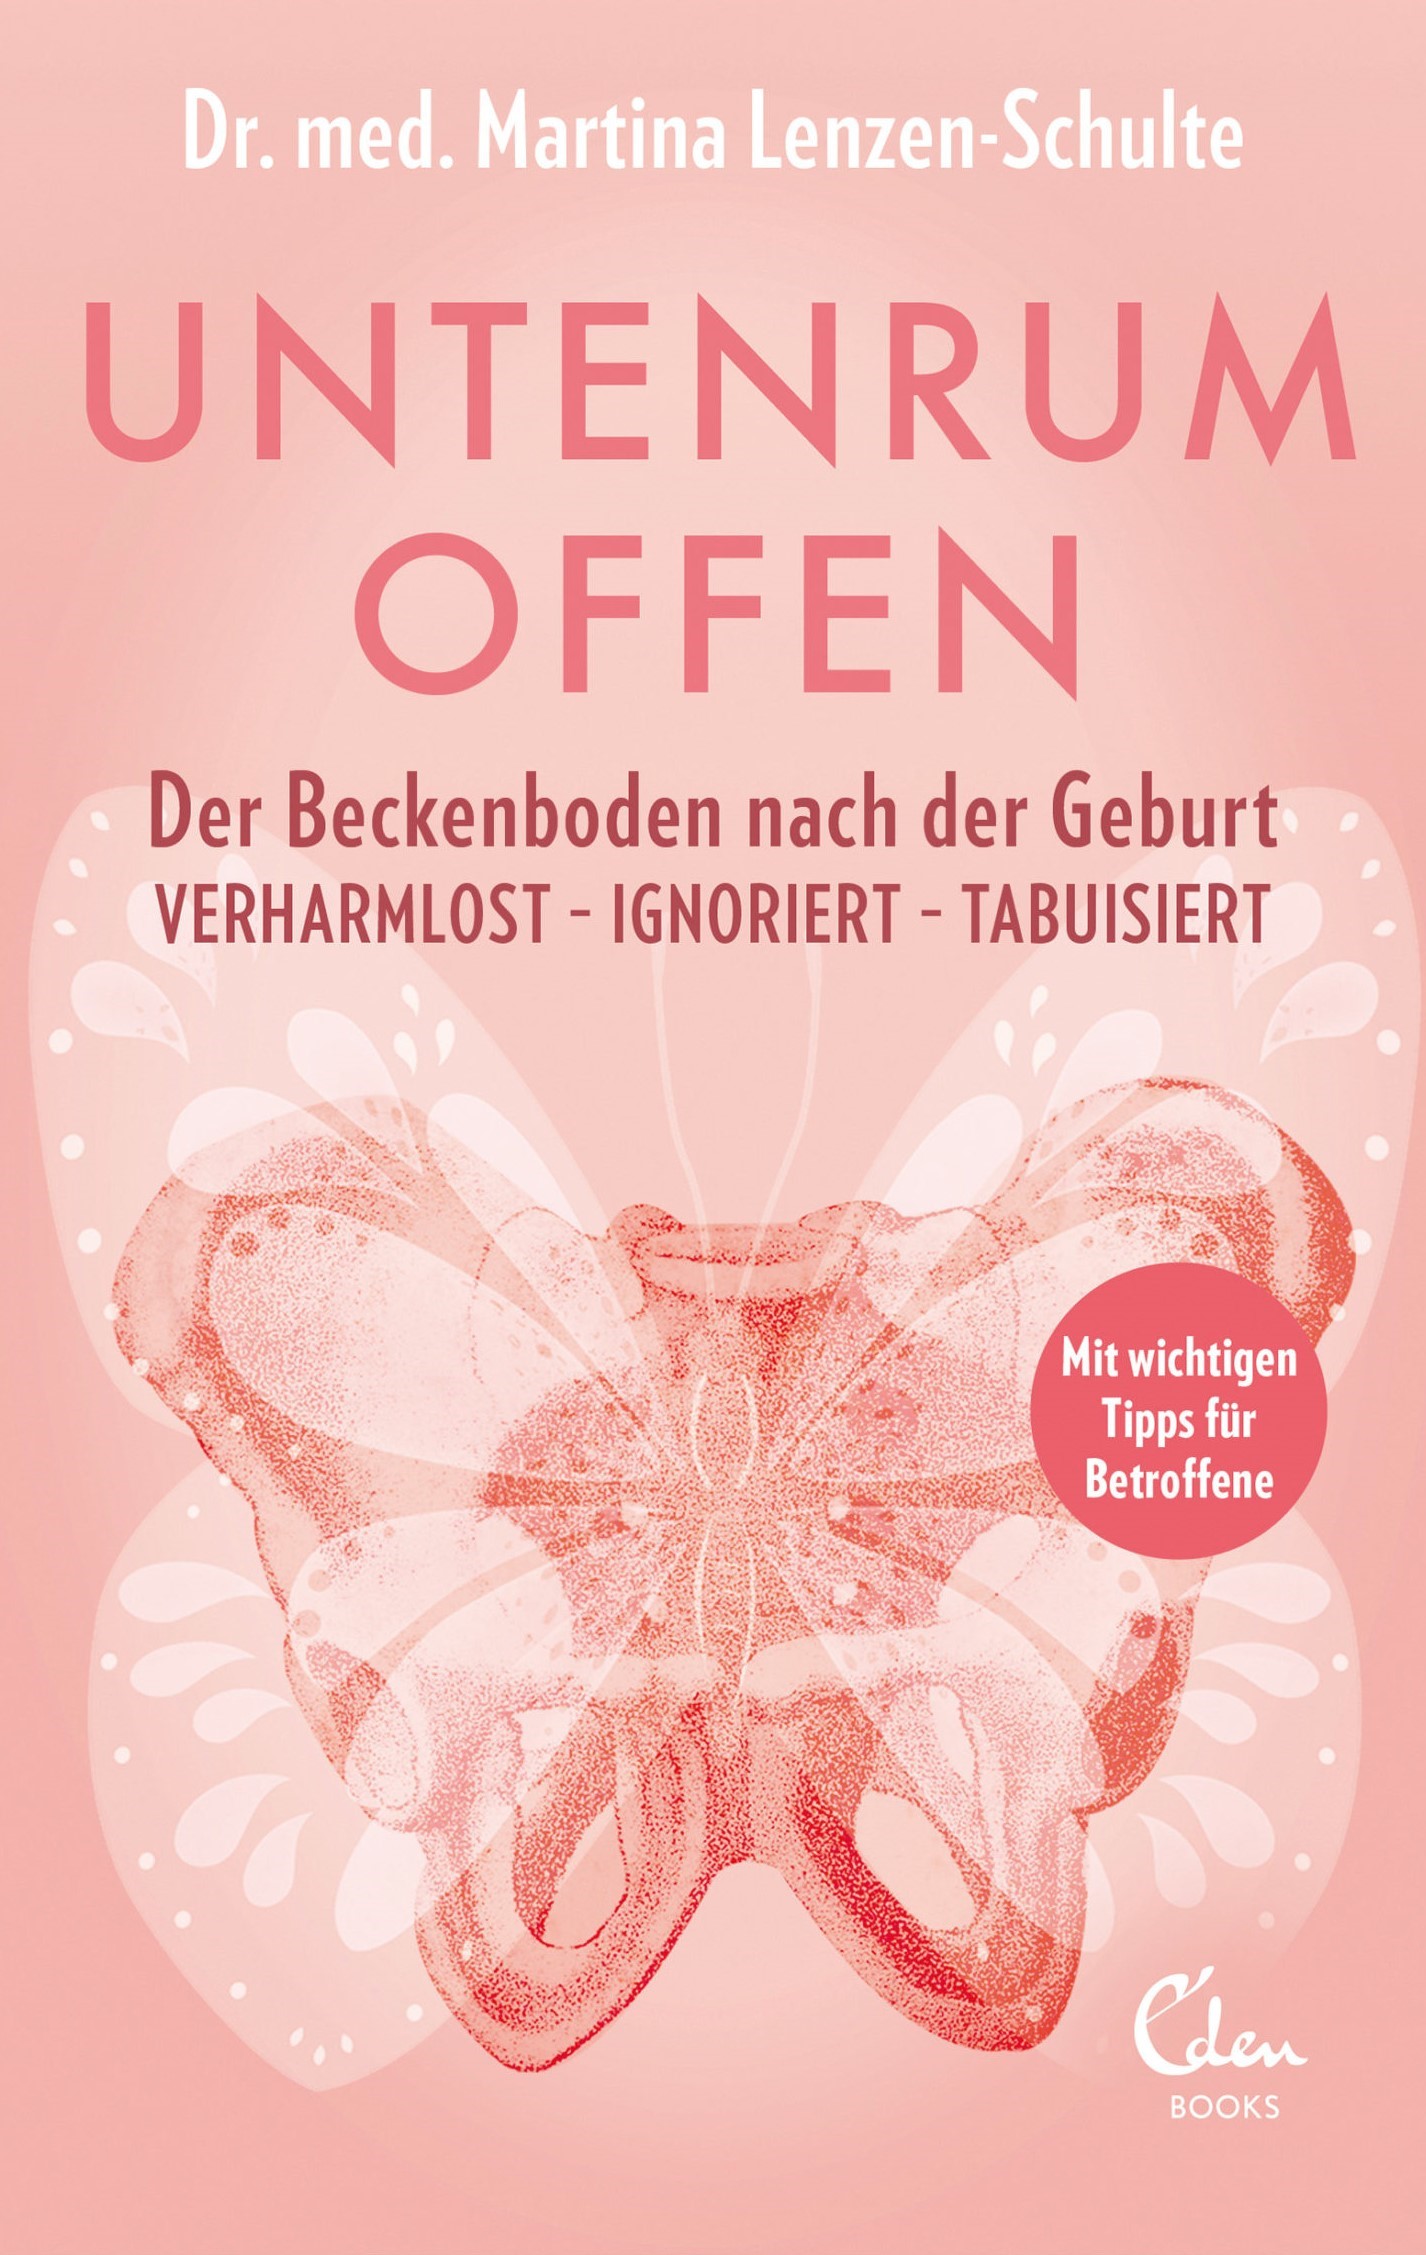 Buchcover: Martina Lenzen-Schulte: Untenrum offen